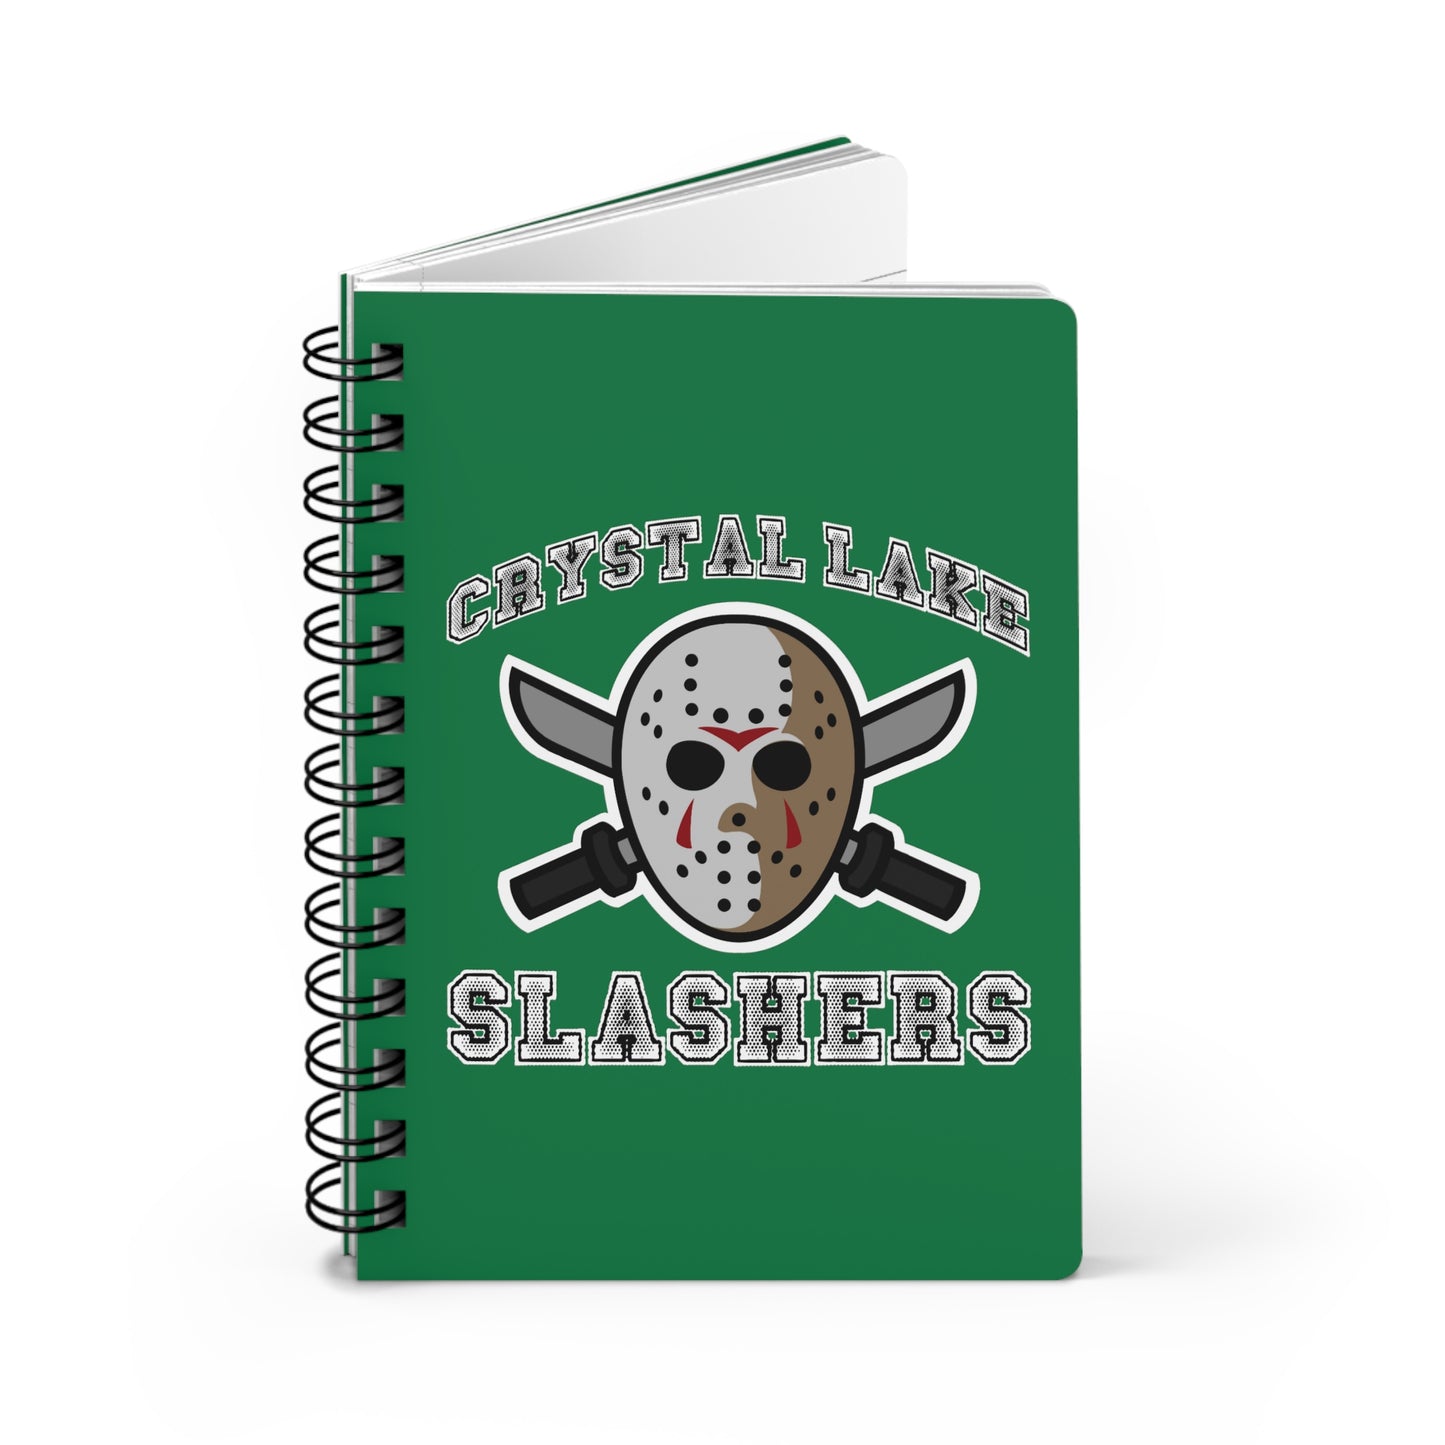 Crystal Lake Slashers Spiral Bound Notebook